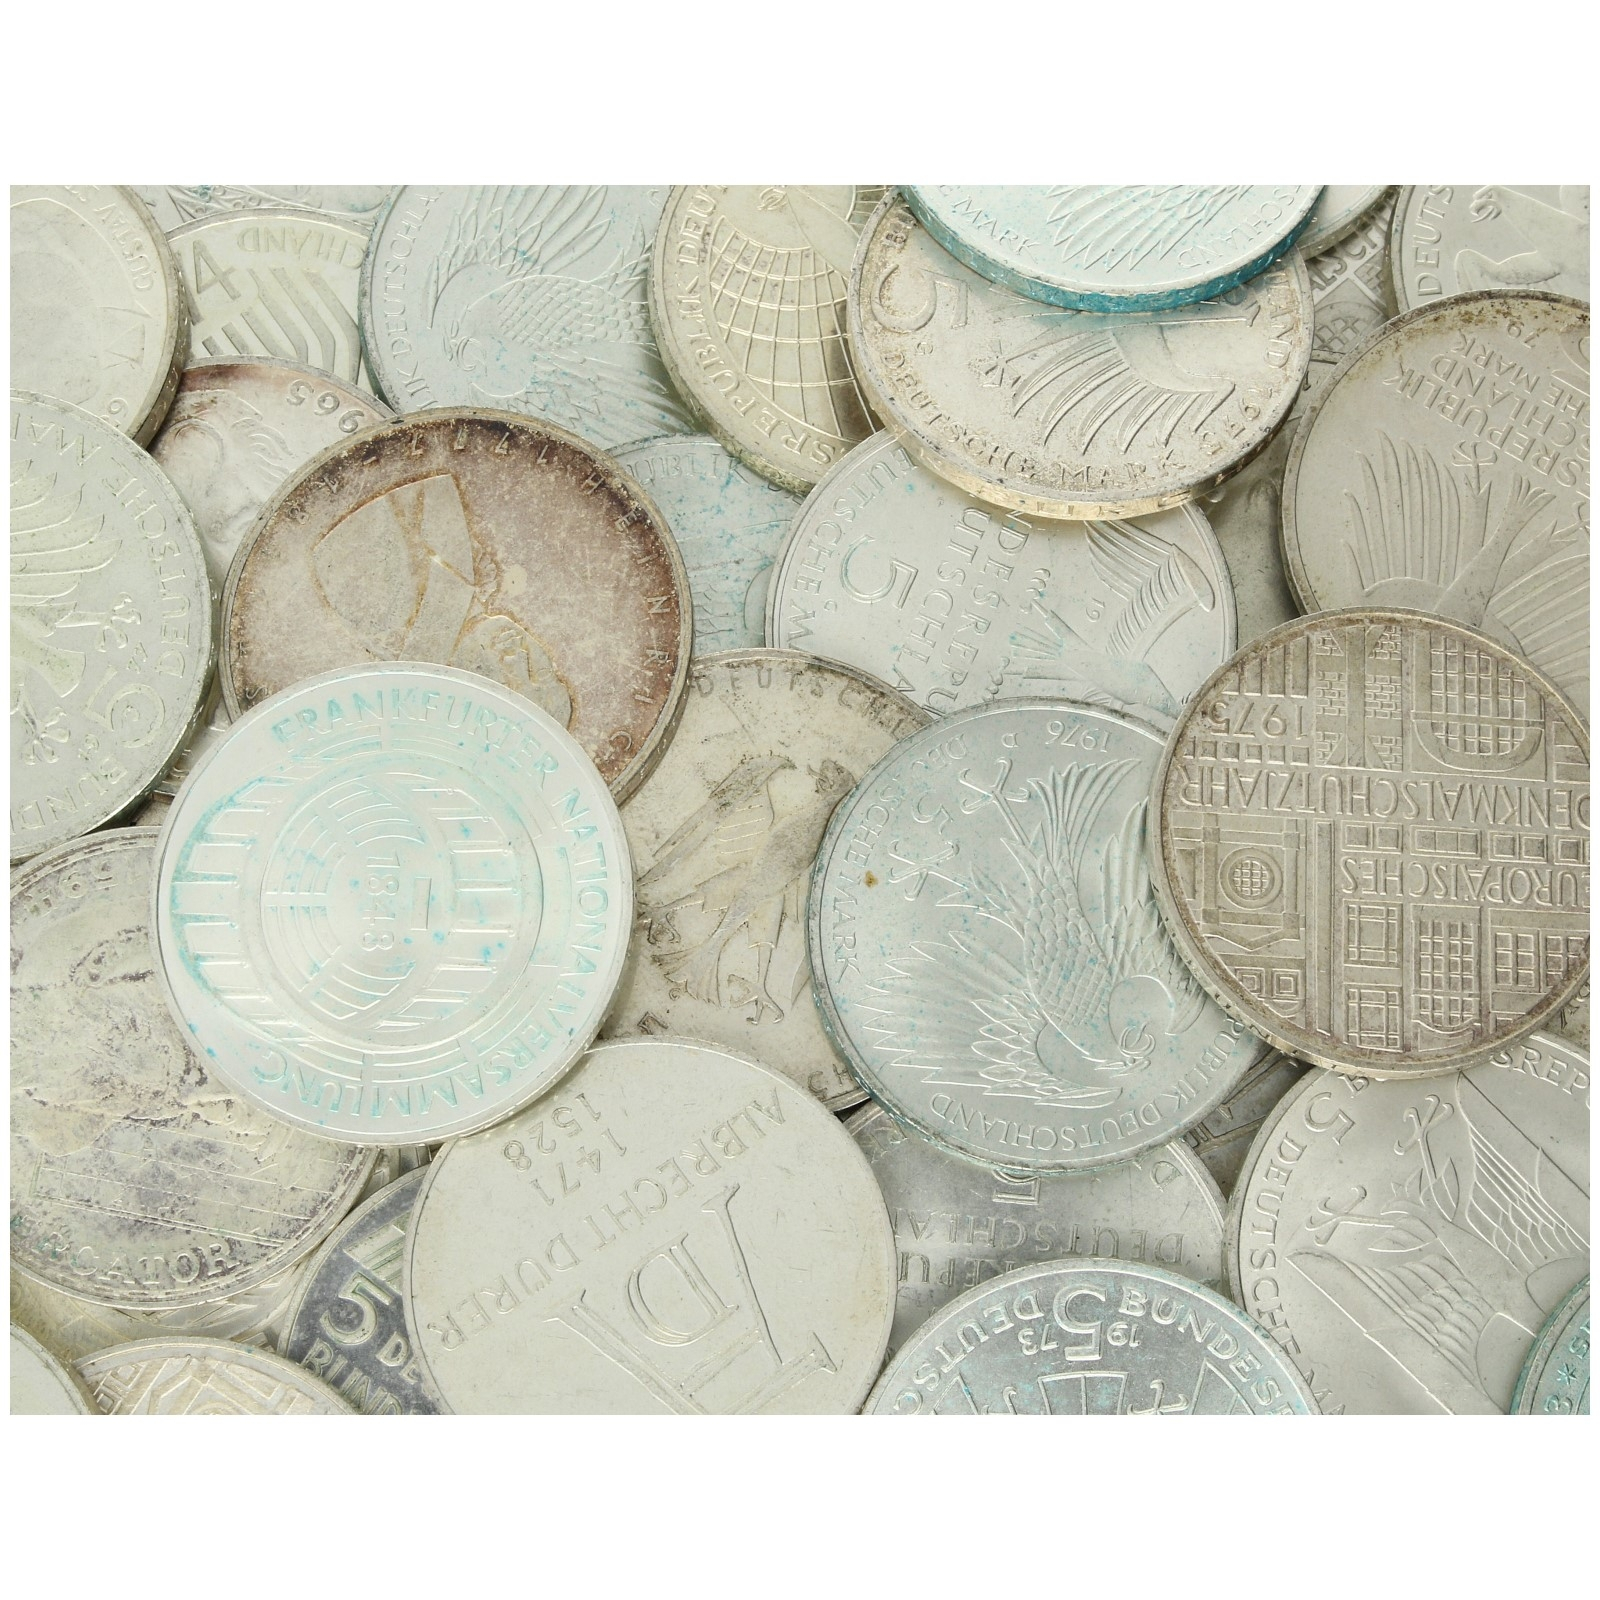 Germany - 5 DM - Commemorative silver coins - 50 pcs - 350 gram fine silver 